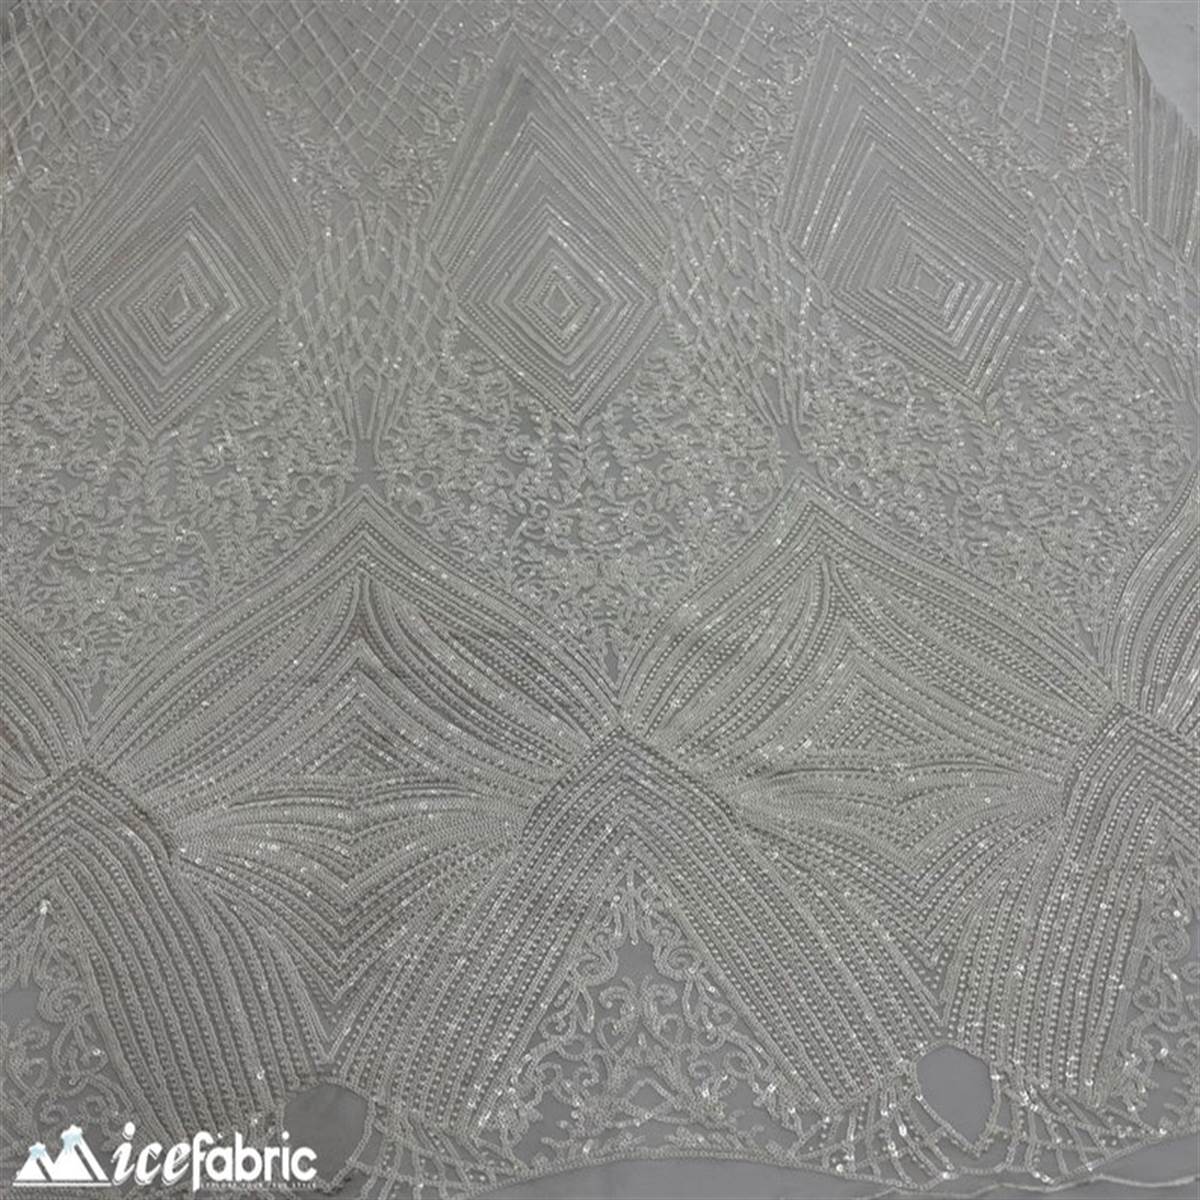 Diamond Geometric Stretch Sequin Fabric On MeshICE FABRICSICE FABRICSWhiteBy The YardDiamond Geometric Stretch Sequin Fabric On Mesh ICE FABRICS White